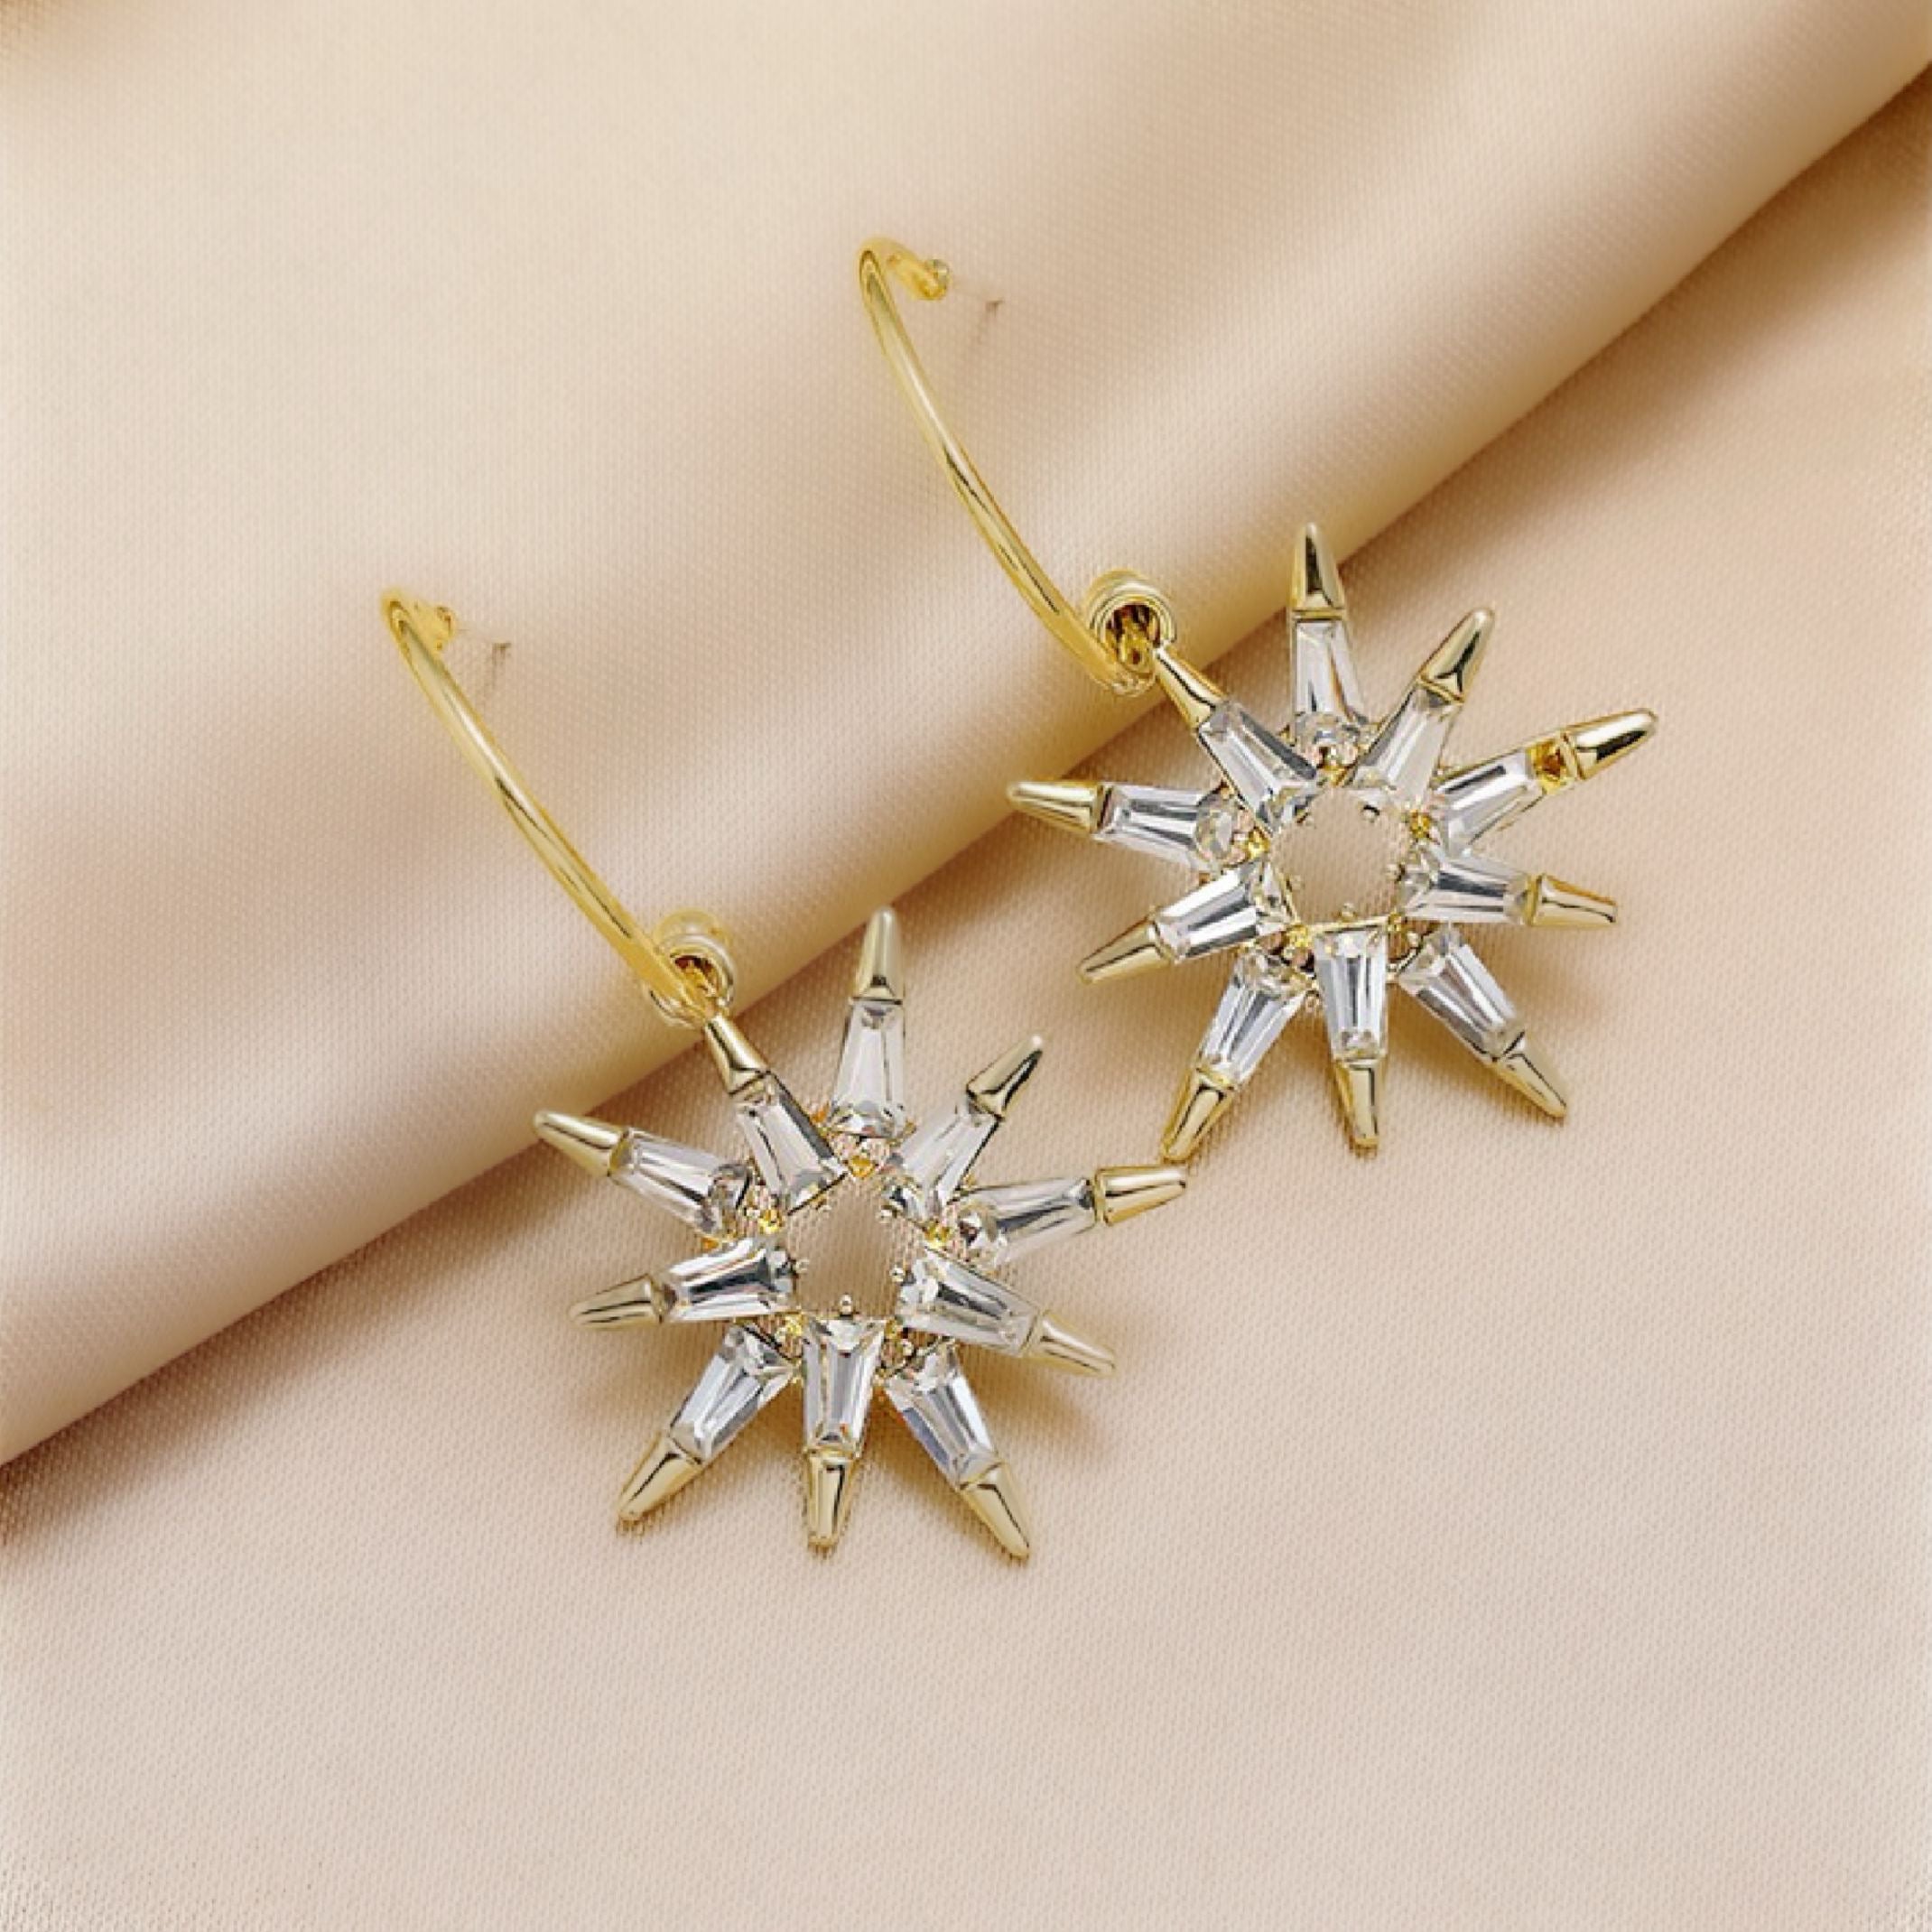 Gold star charm earrings 